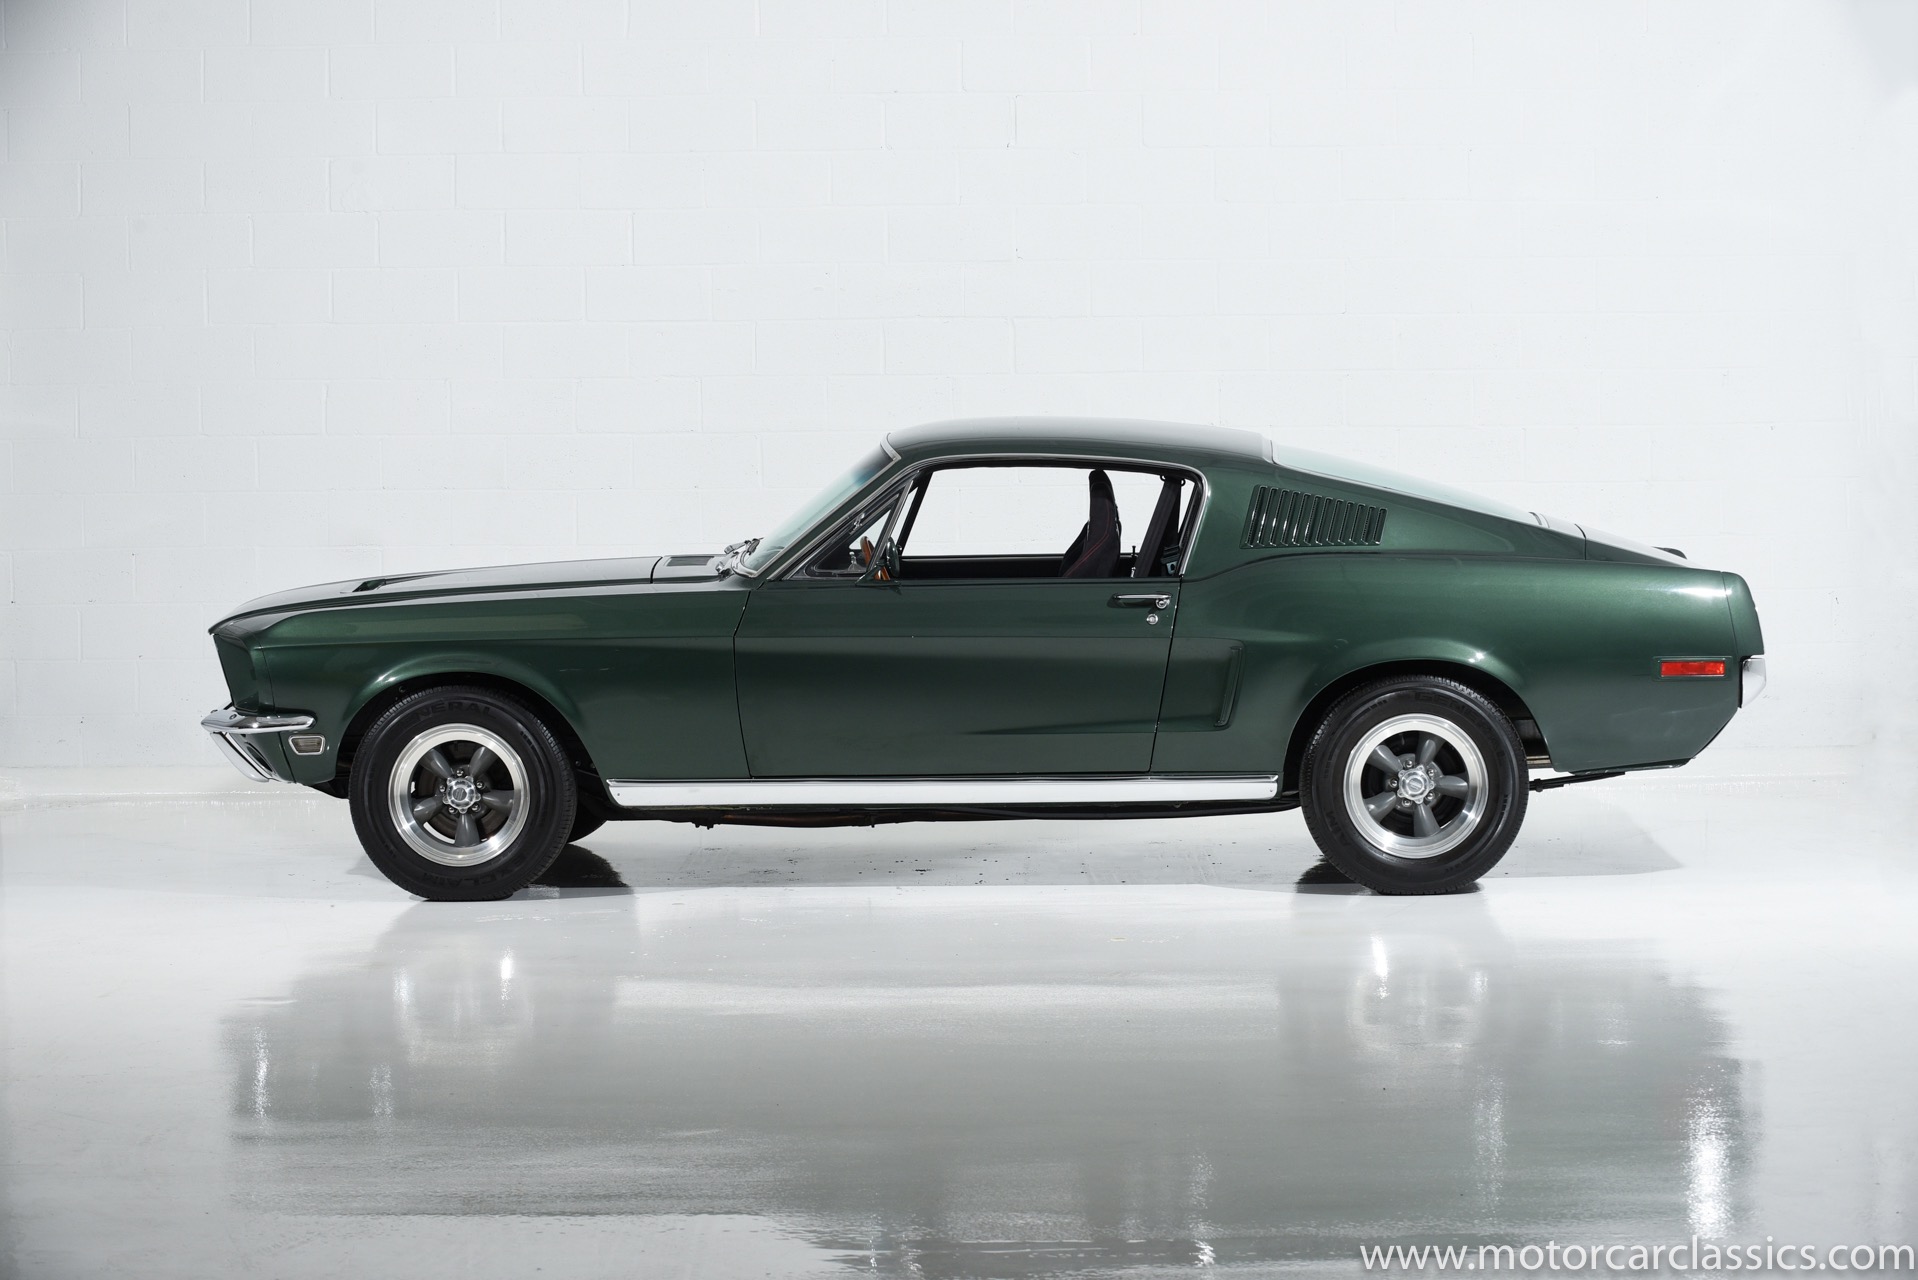 Used 1967 Ford Mustang Bullitt For Sale ($64,900) | Motorcar Classics ...